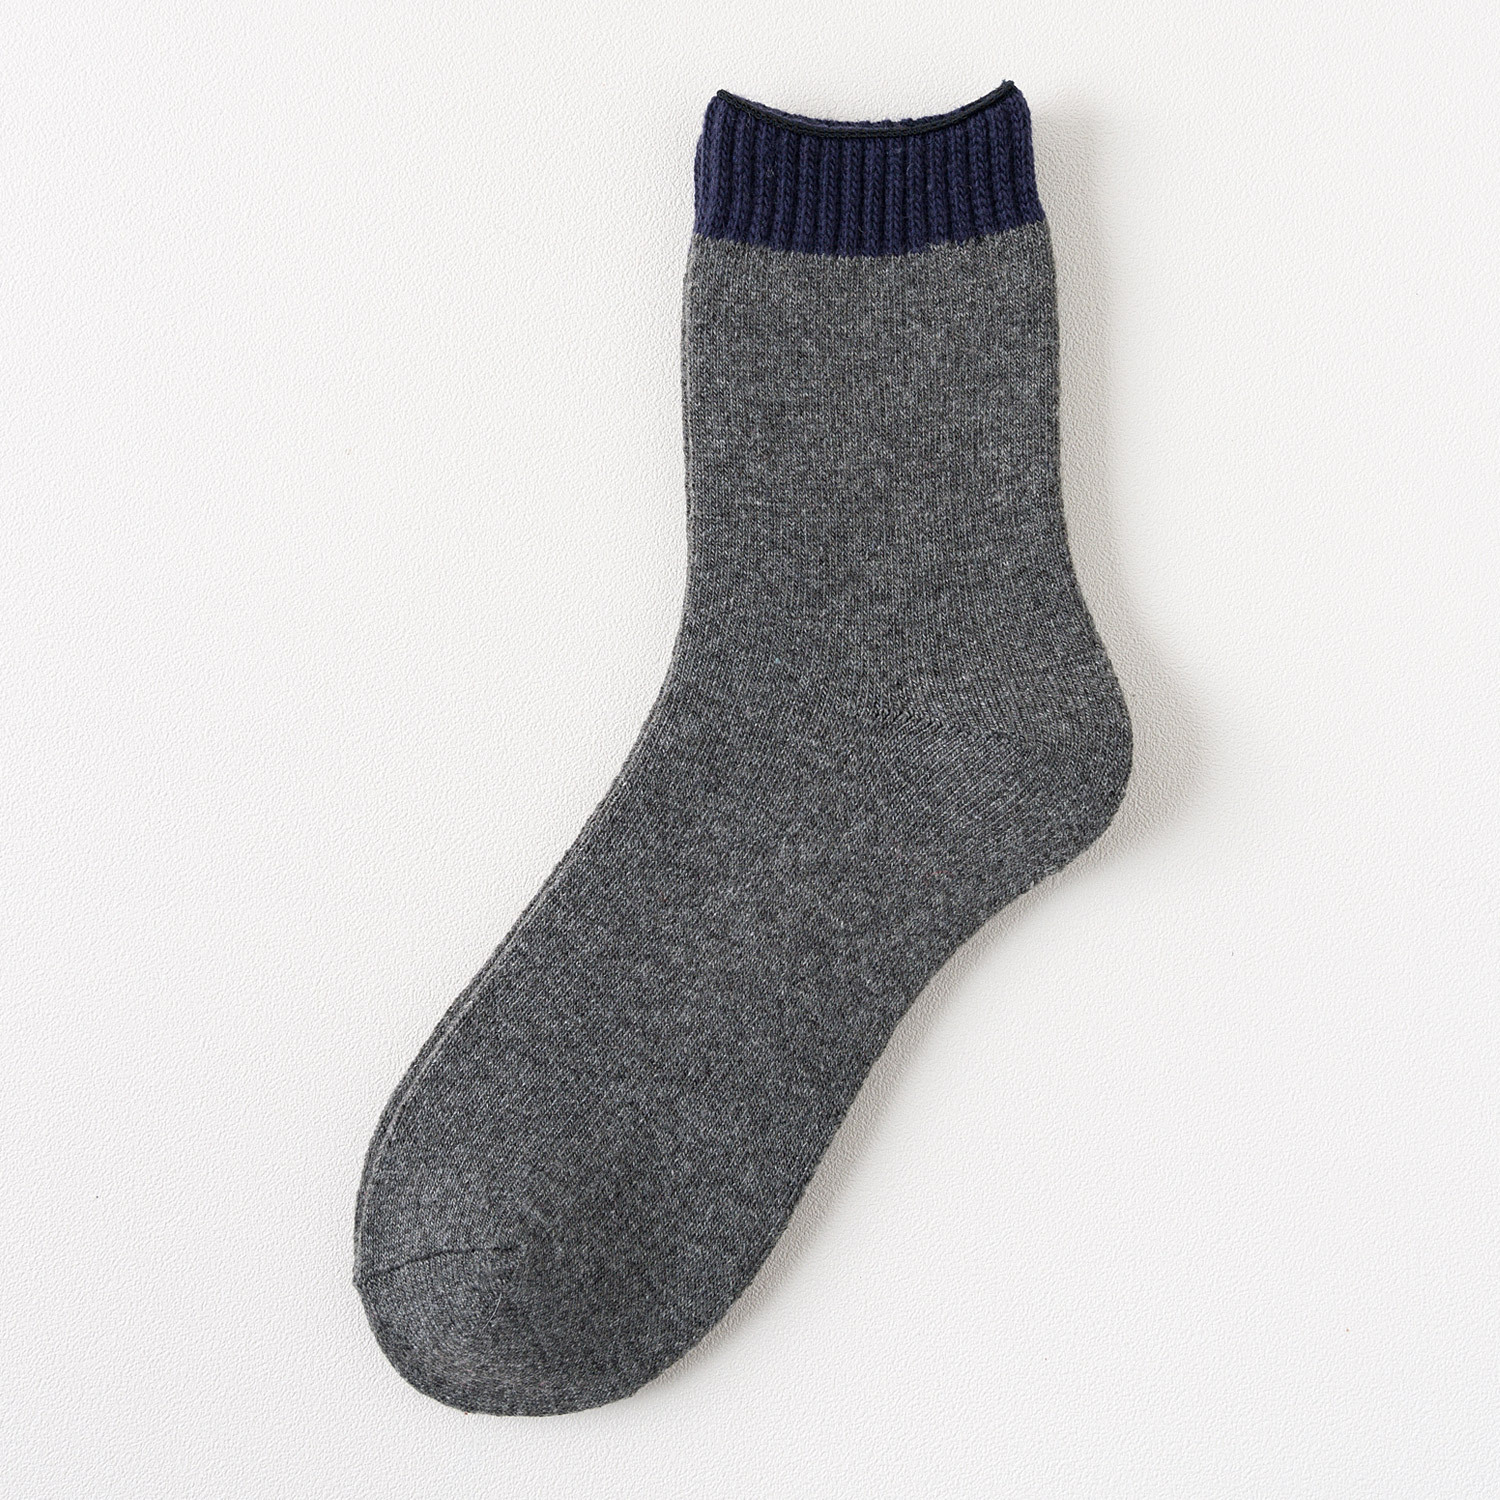 Winter Wool Mixed Wool Socks Men Thick Warm Socks Male Socks Terry